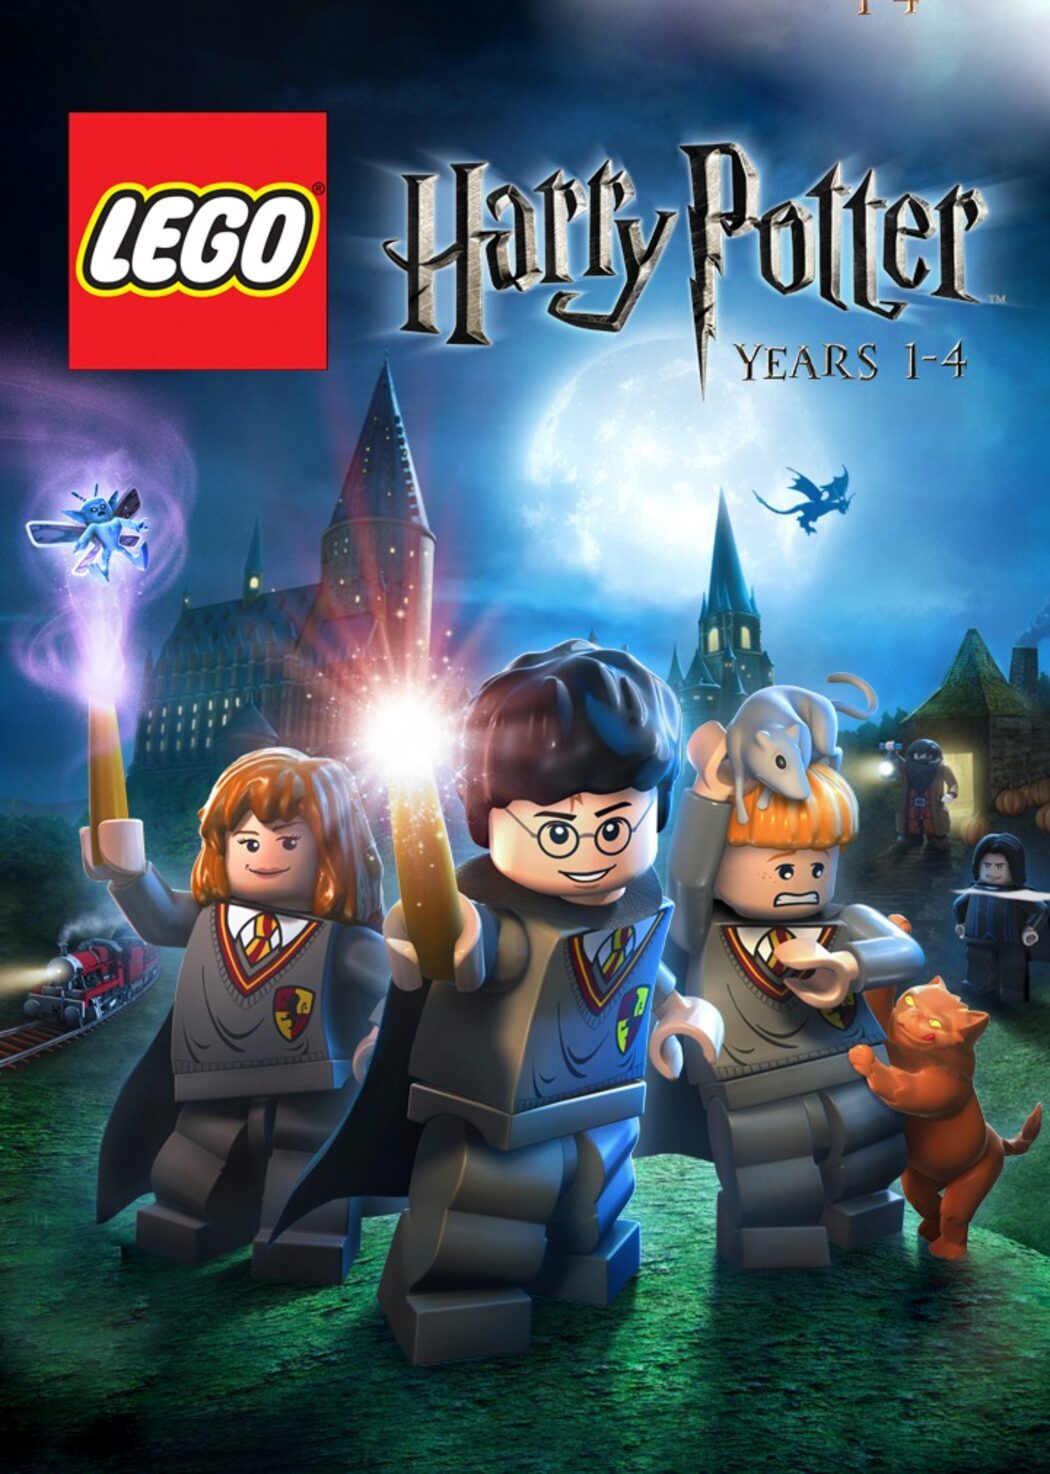 Acheter LEGO Harry Potter Collection Switch Nintendo Eshop